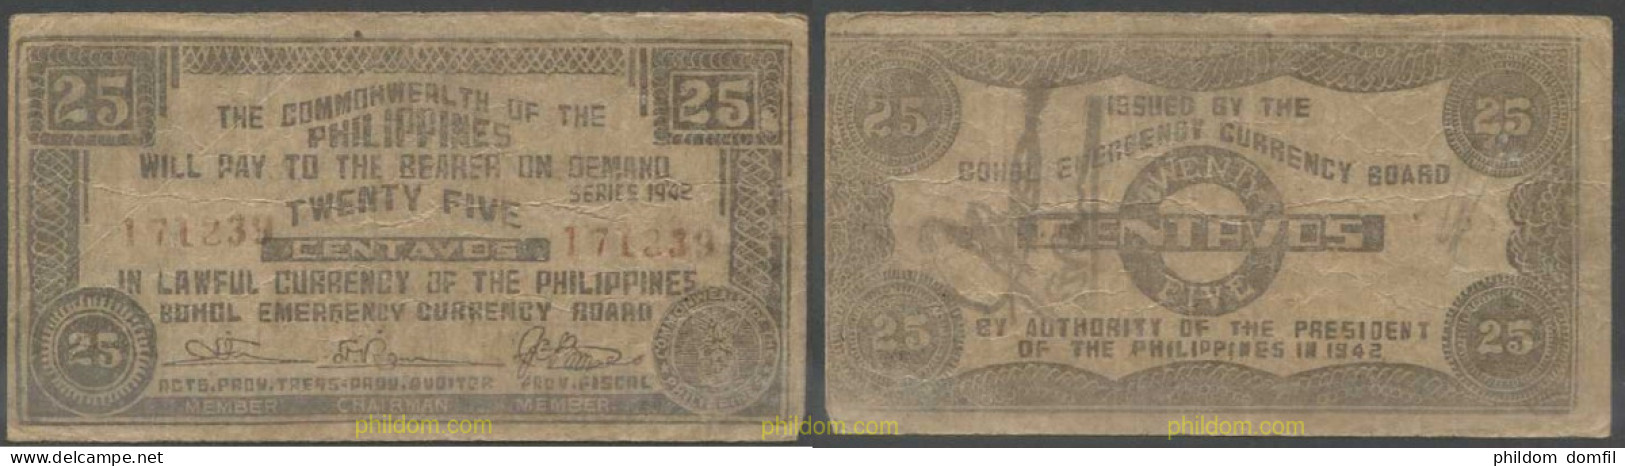 5898 FILIPINAS 1942 FILIPINAS 25 CENTAVOS 1942 - Filipinas